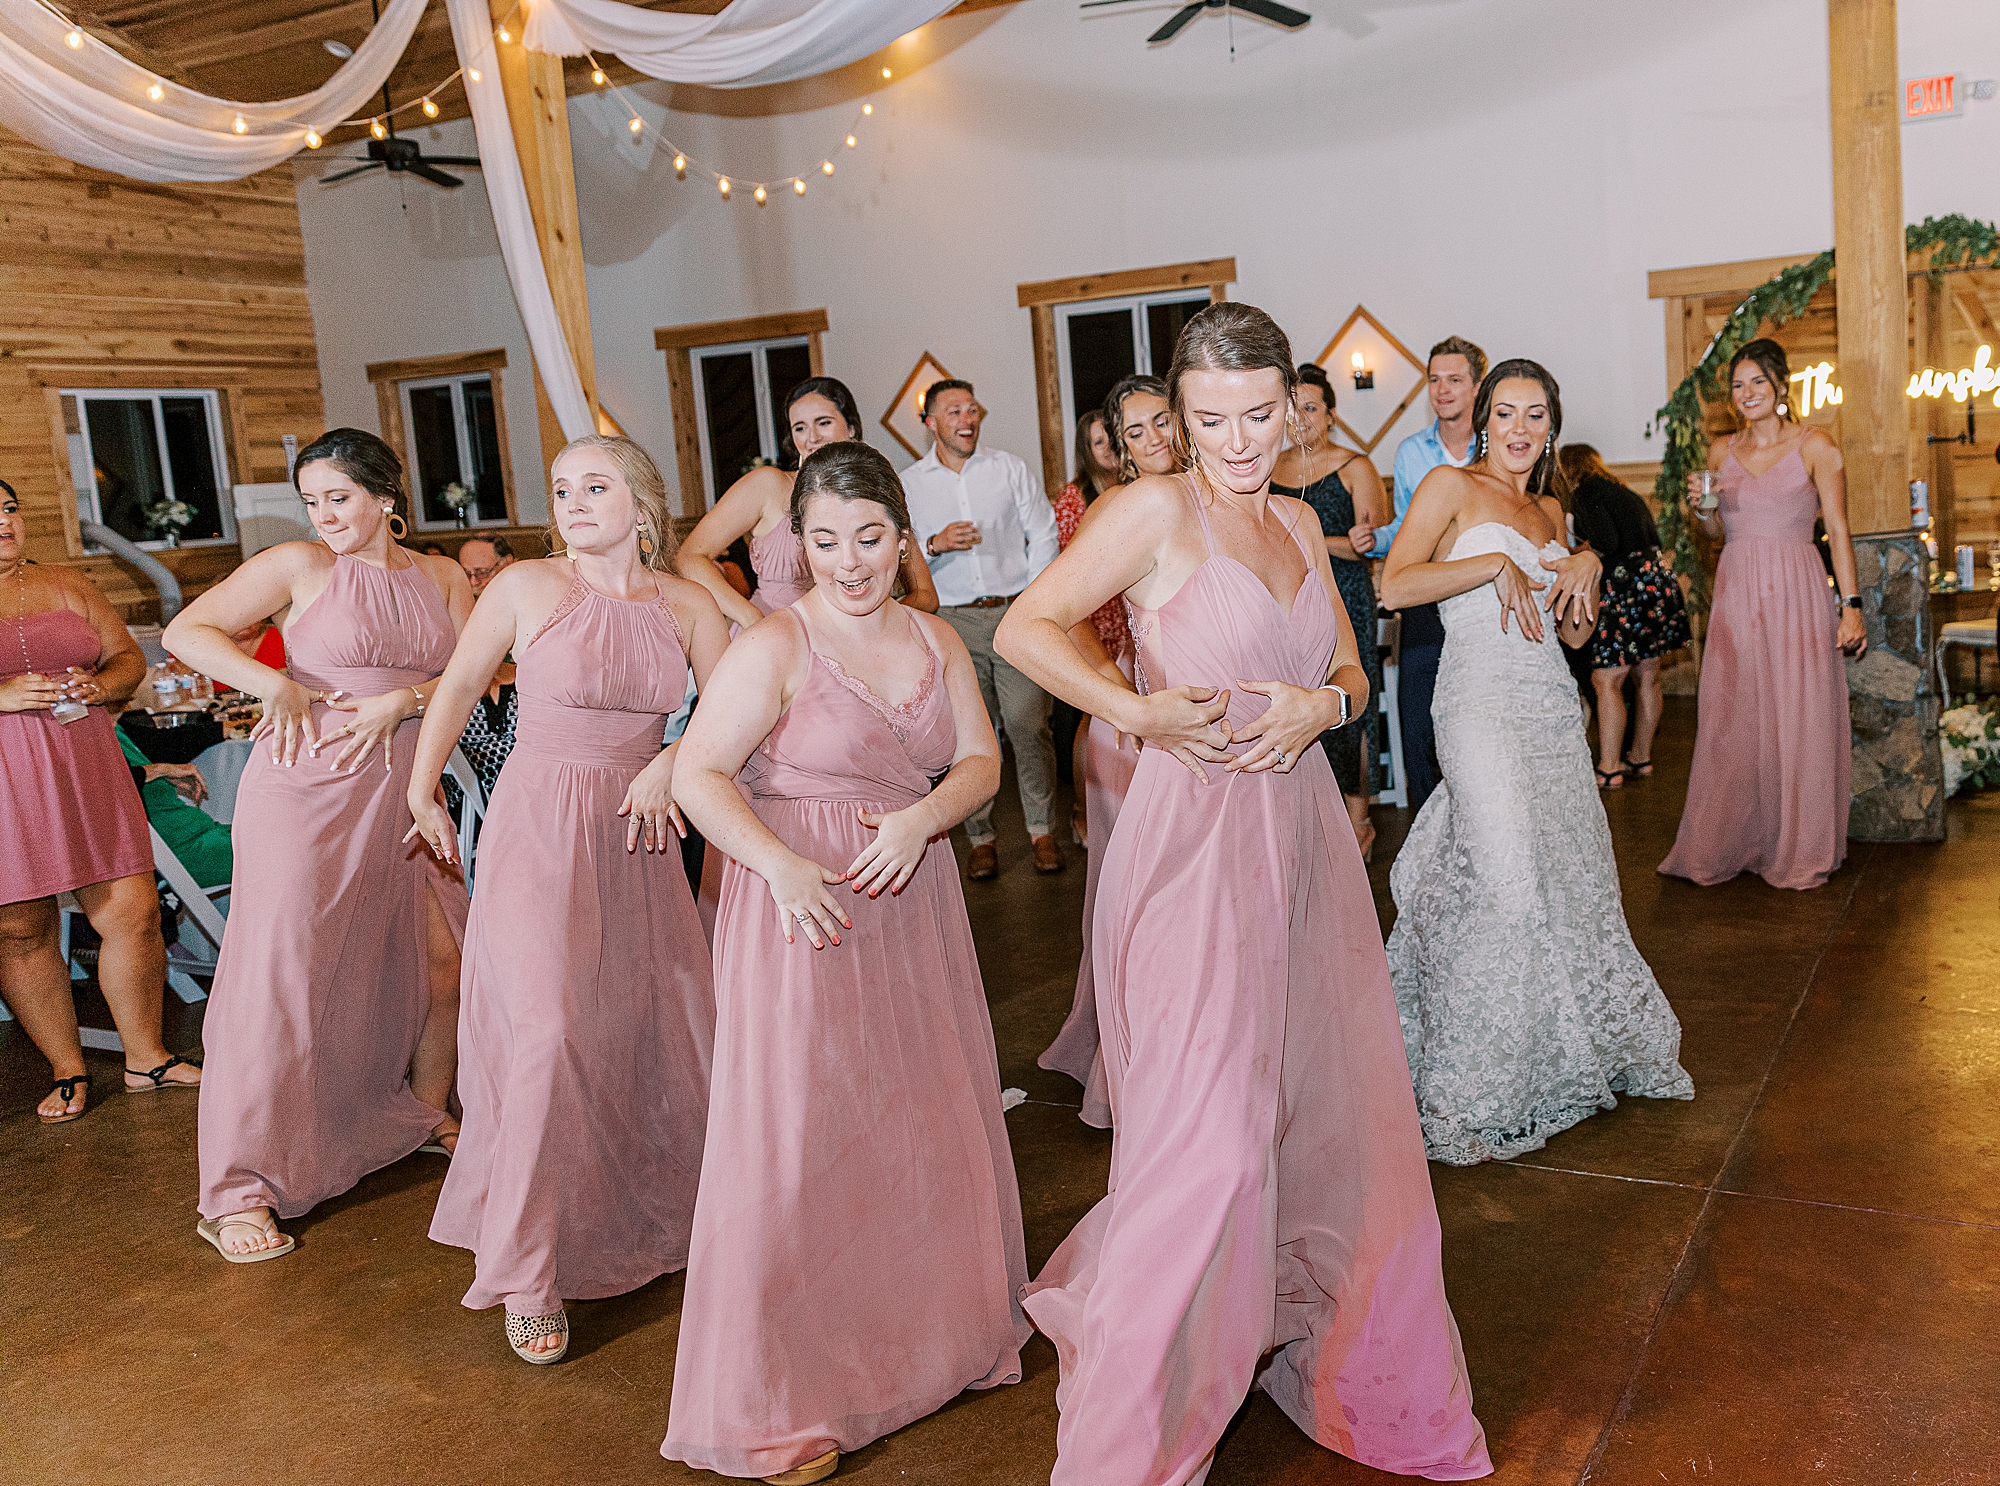 Coordinated dance between bridesmaids at wedding reception. 